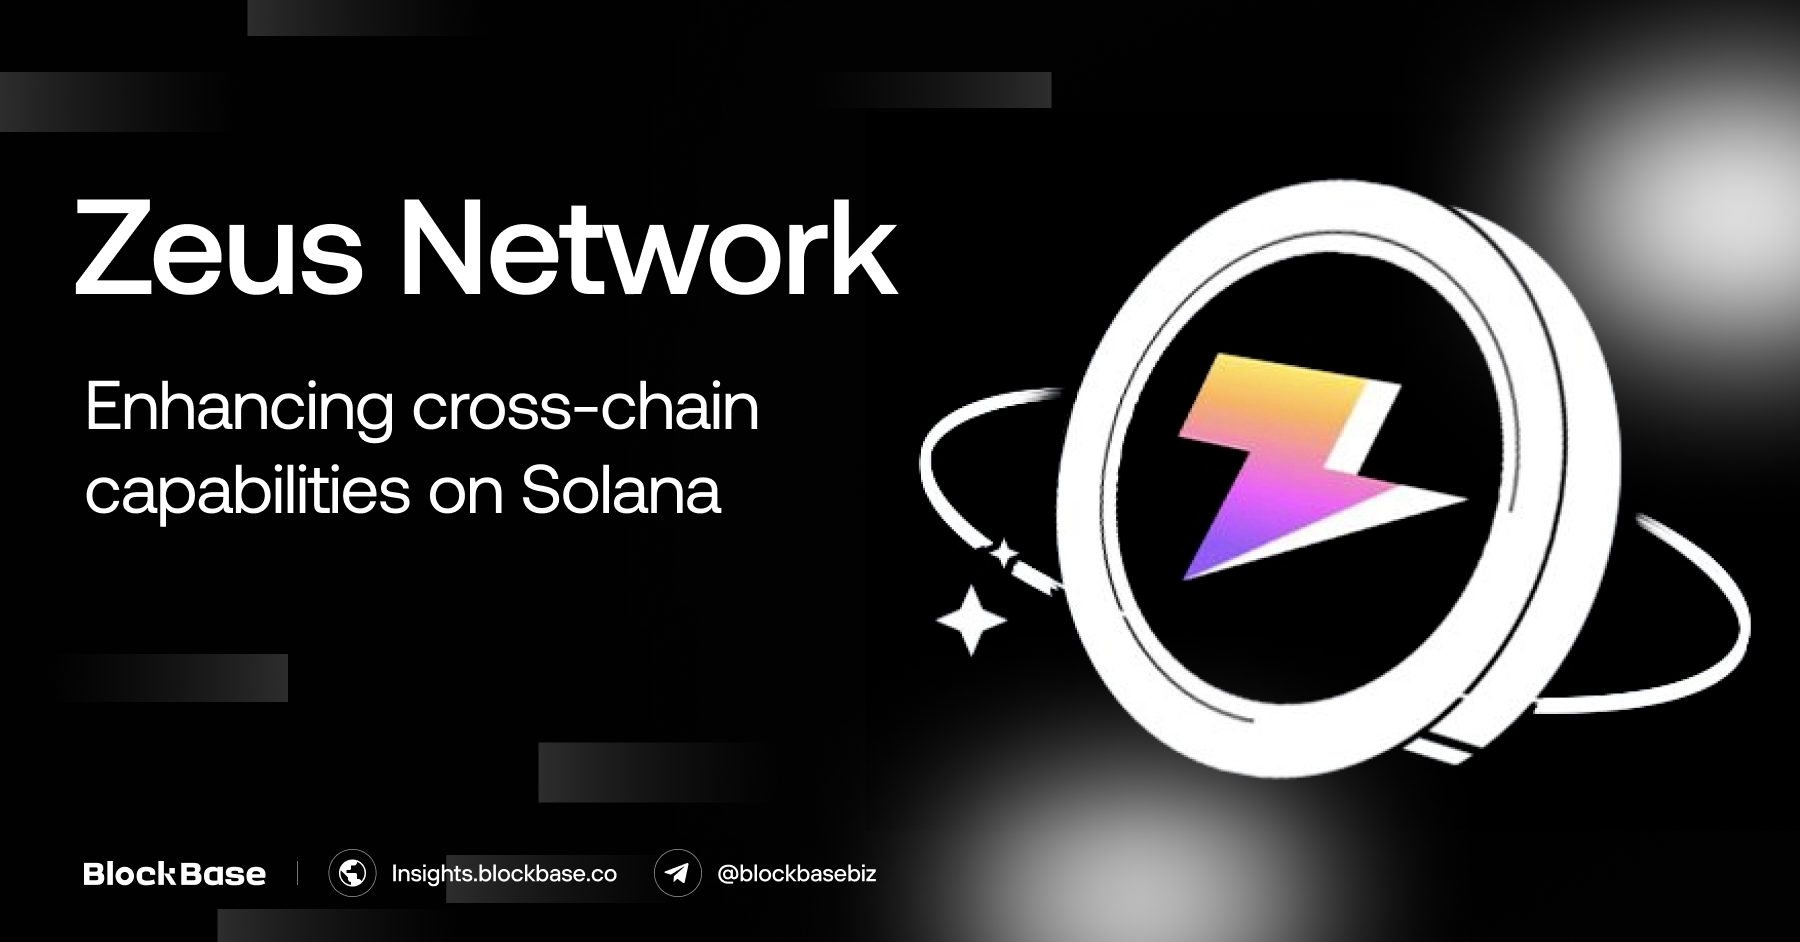 Zeus Network – Enhancing cross-chain capabilities on Solana